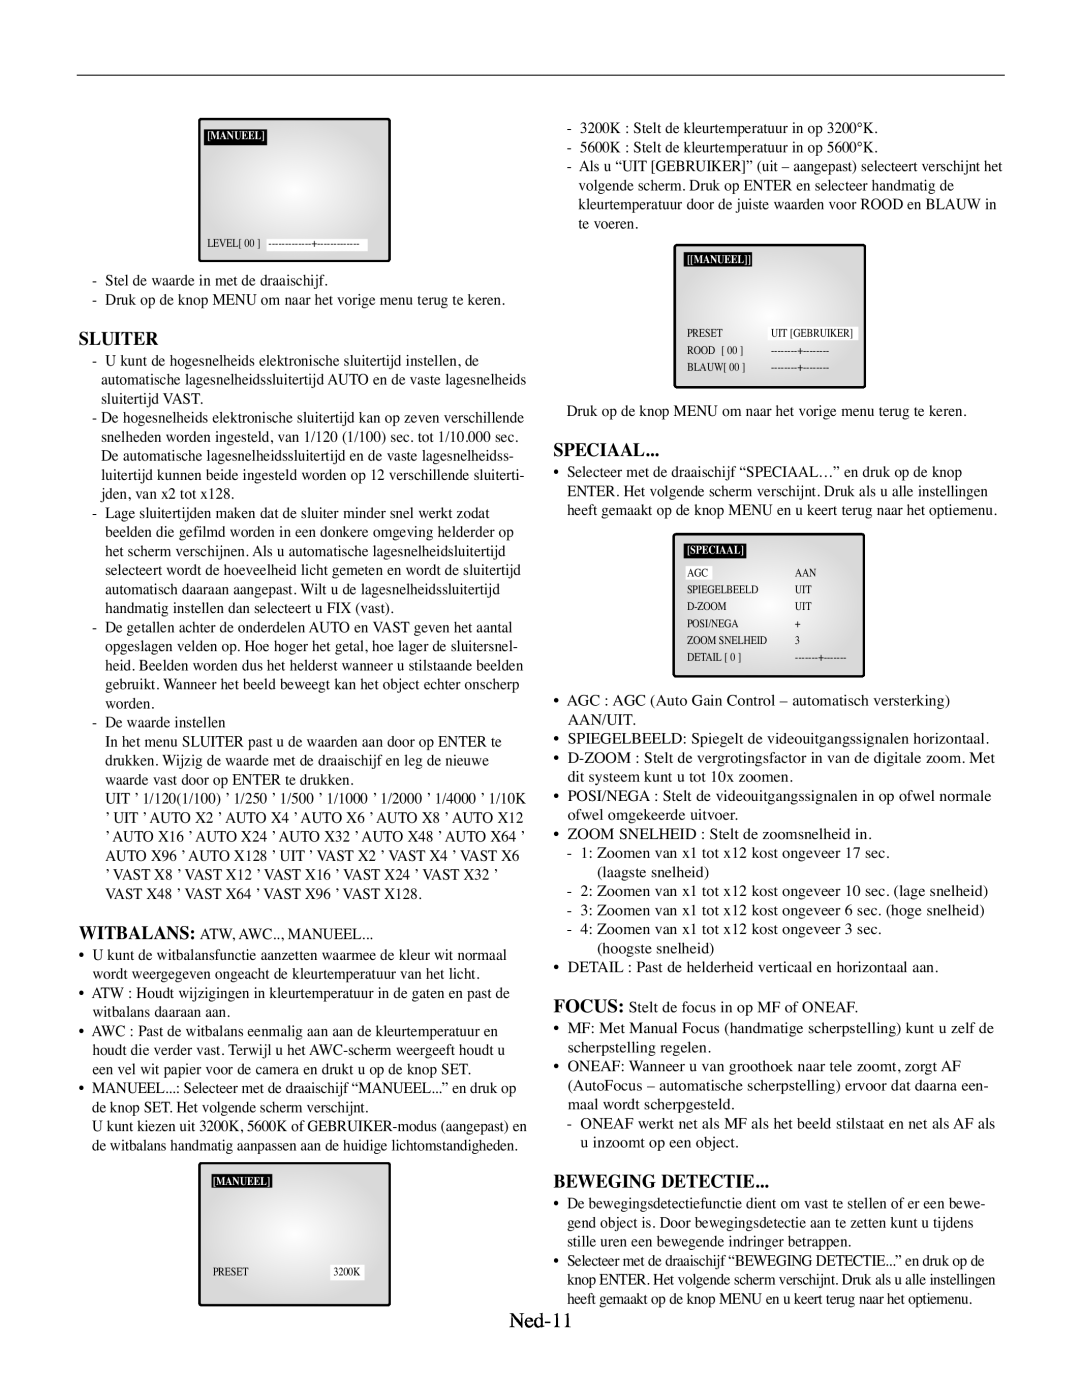 Samsung SMO-210MP/UMG, SMO-210TRP manual Ned-11, Sluiter, Speciaal, Beweging Detectie 